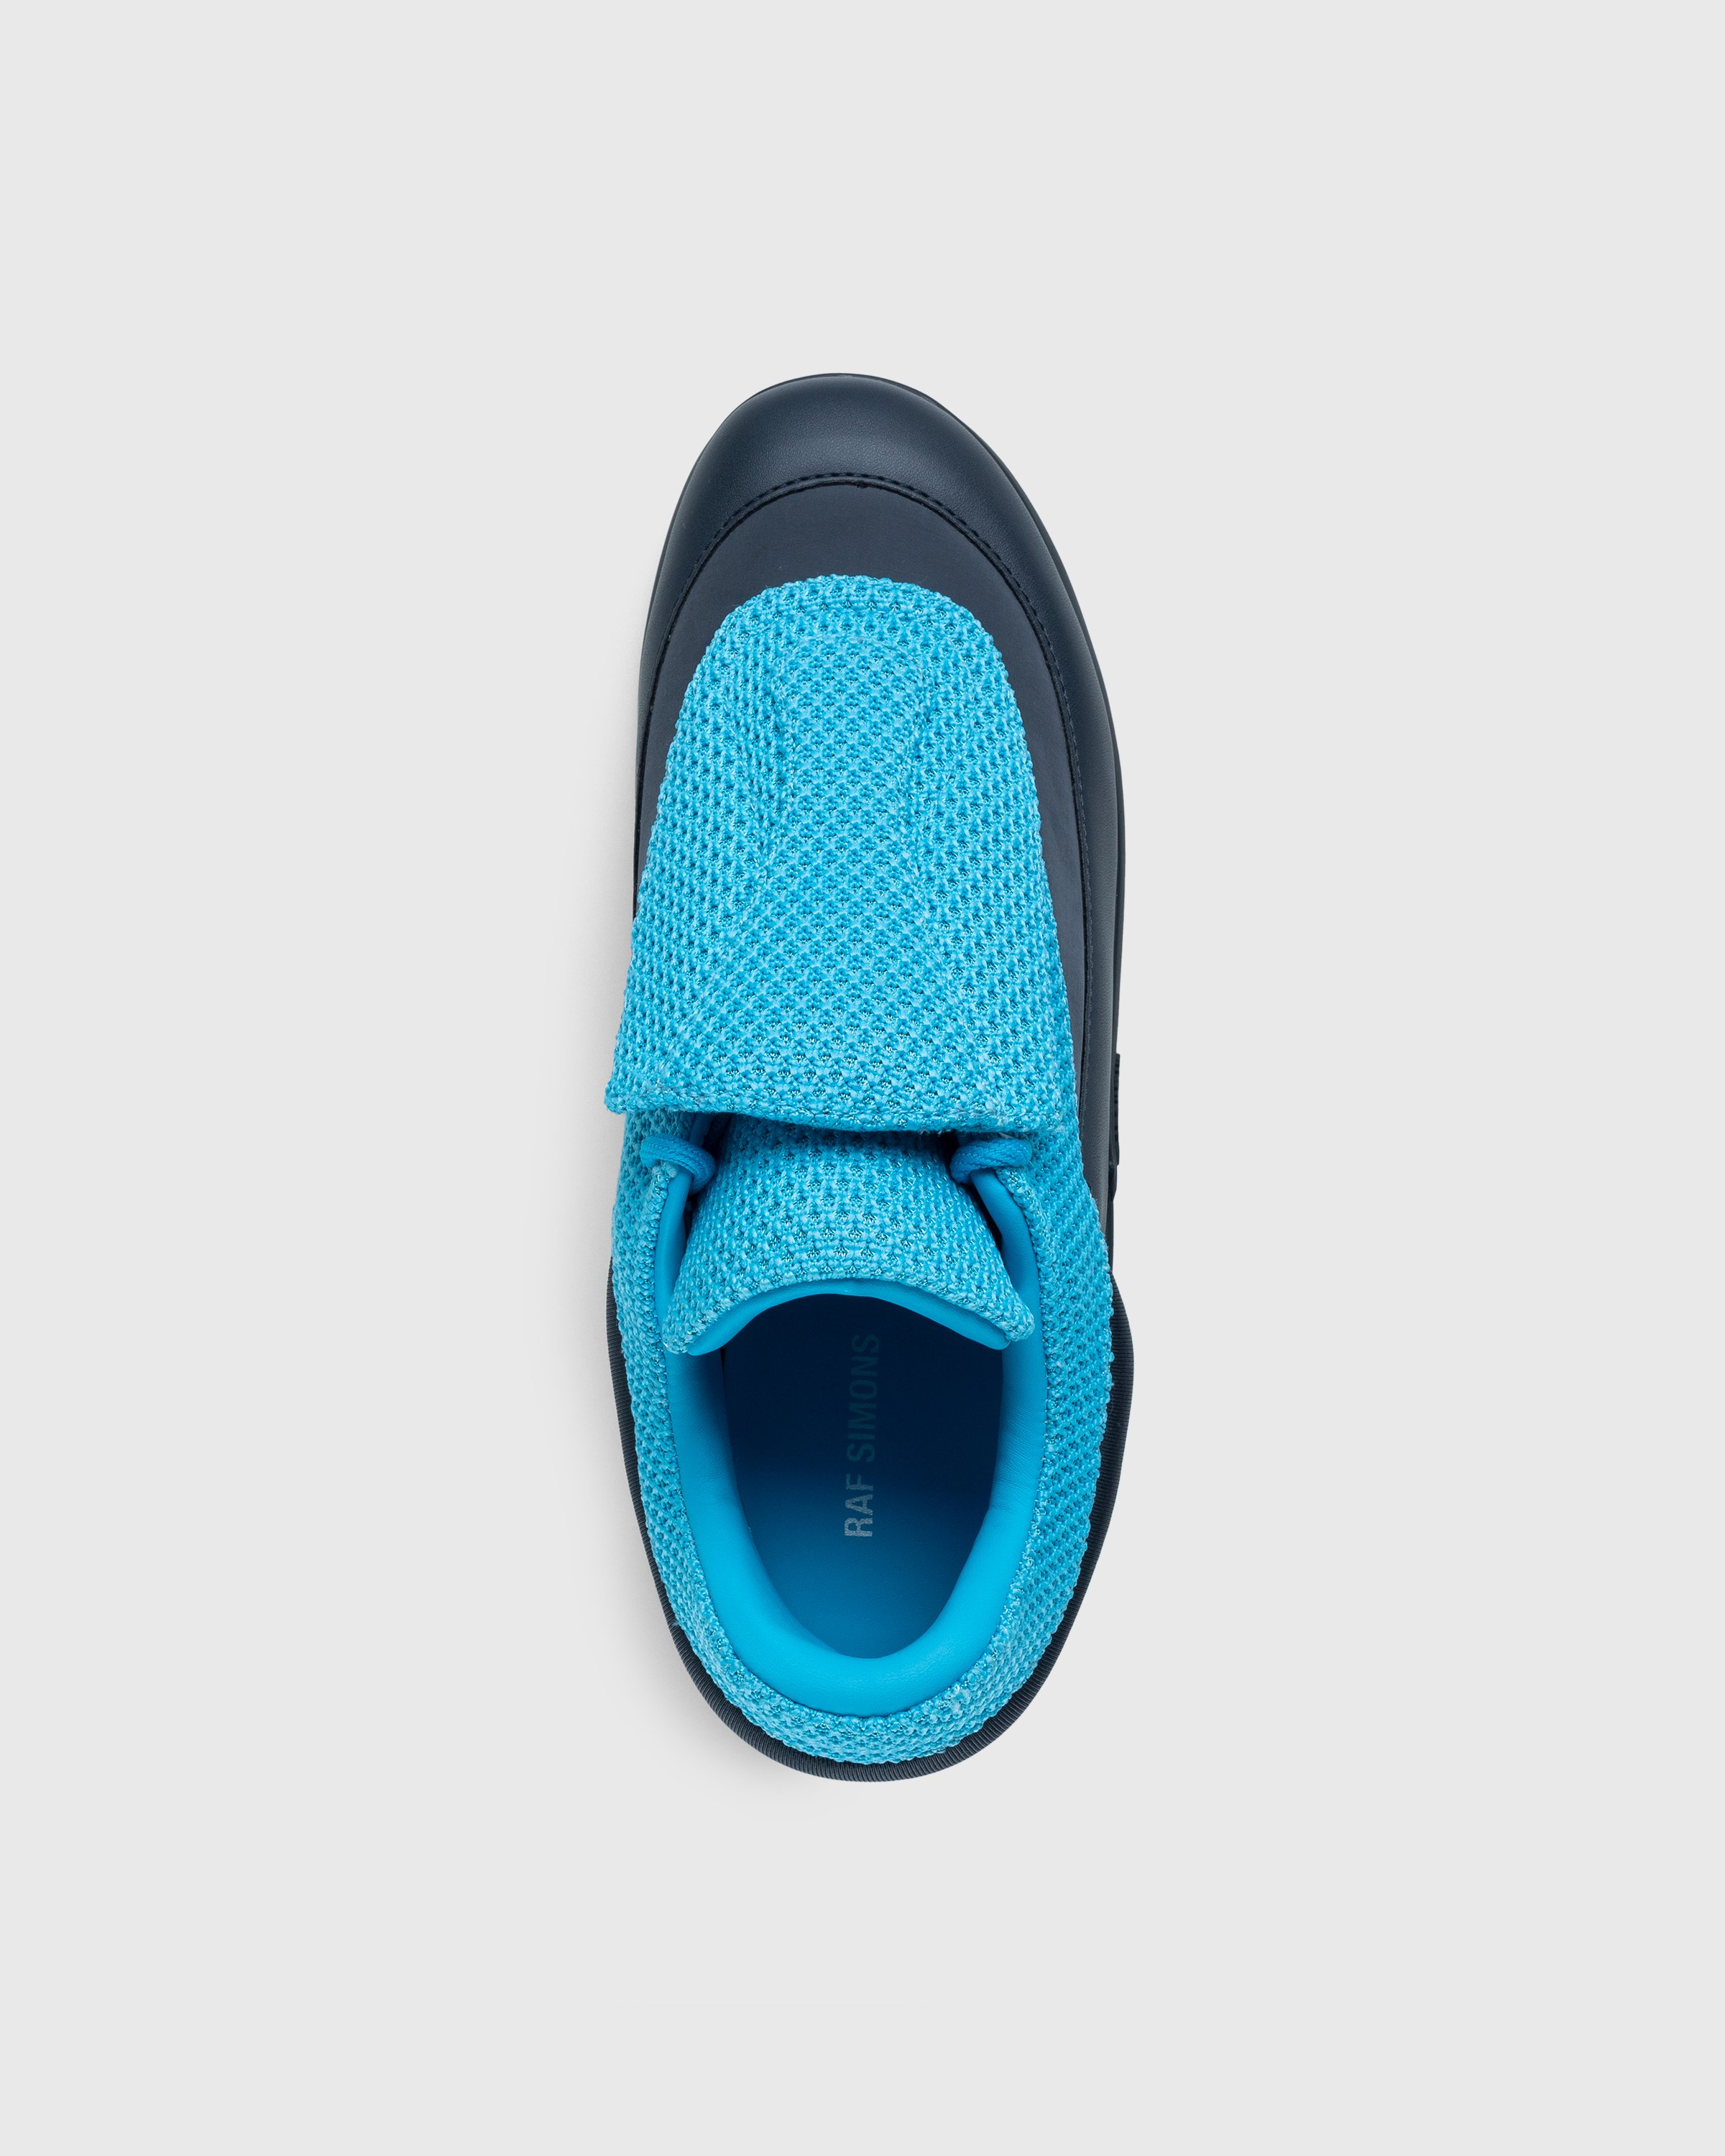 Raf Simons - Antei Aqua - Footwear - Blue - Image 5